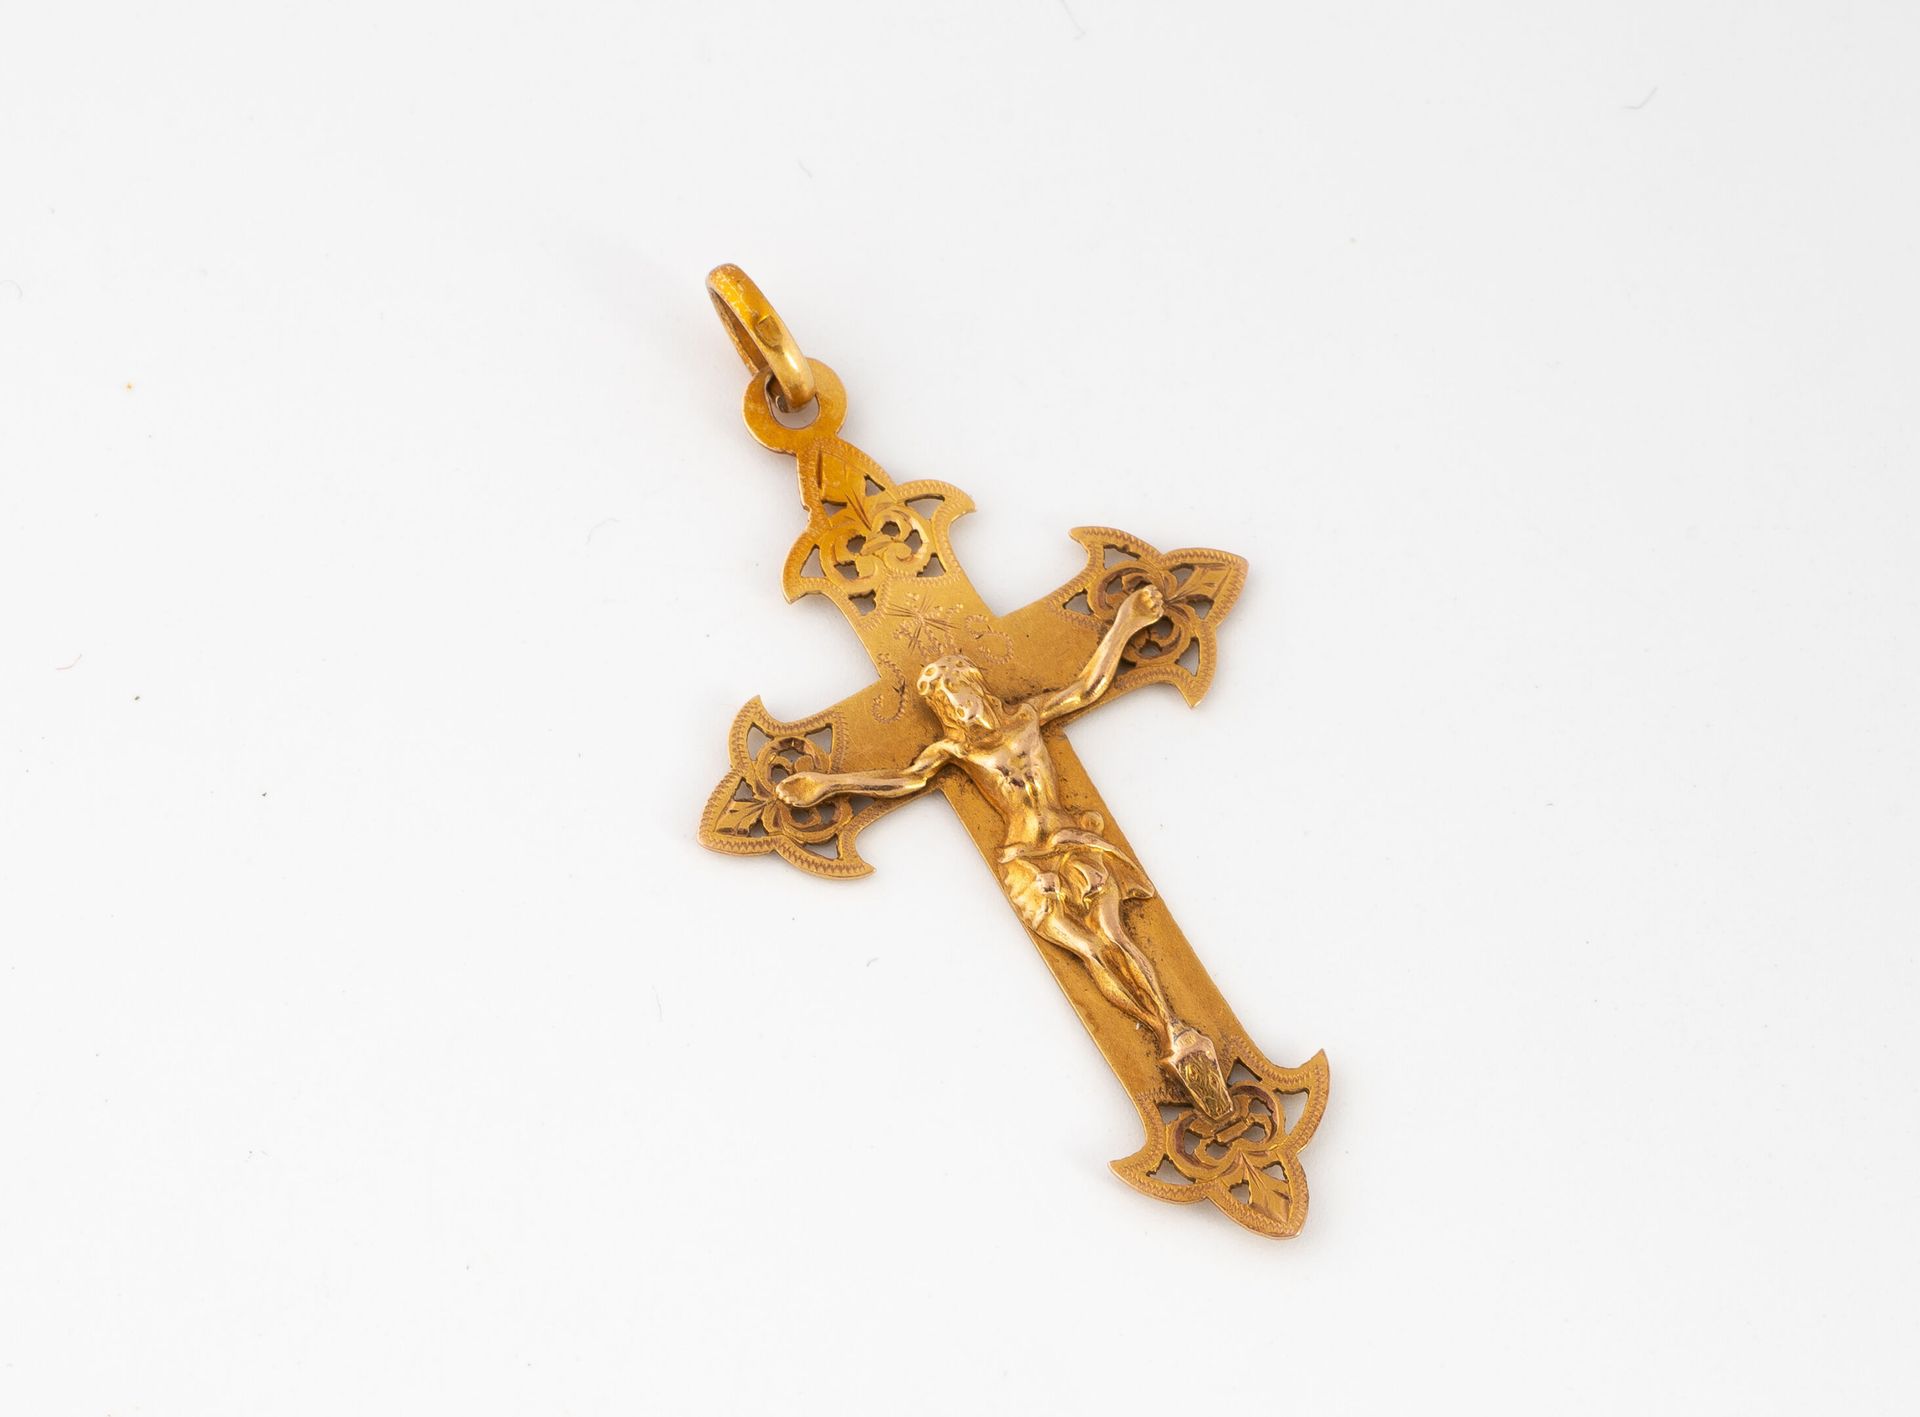 Null Pendentif croix or jaune (750).
Poids : 3,0 g. - H. 4,5 cm env.
Rayures et &hellip;